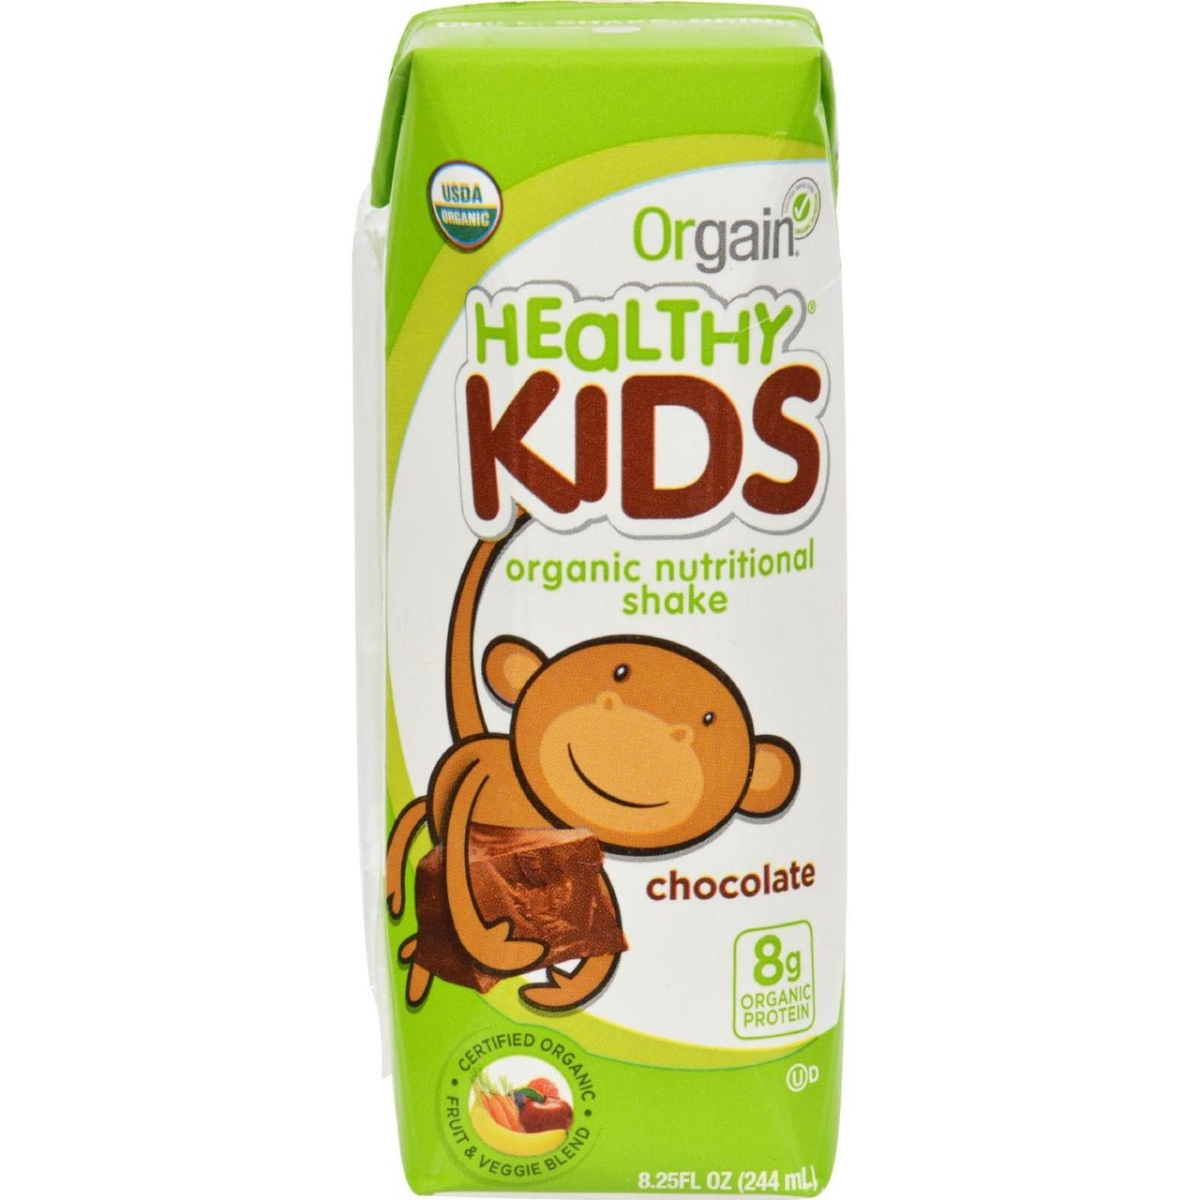 Hg1189760 8.25 Fl Oz Organic Nutrition Shake - Chocolate Kids, Case Of 12